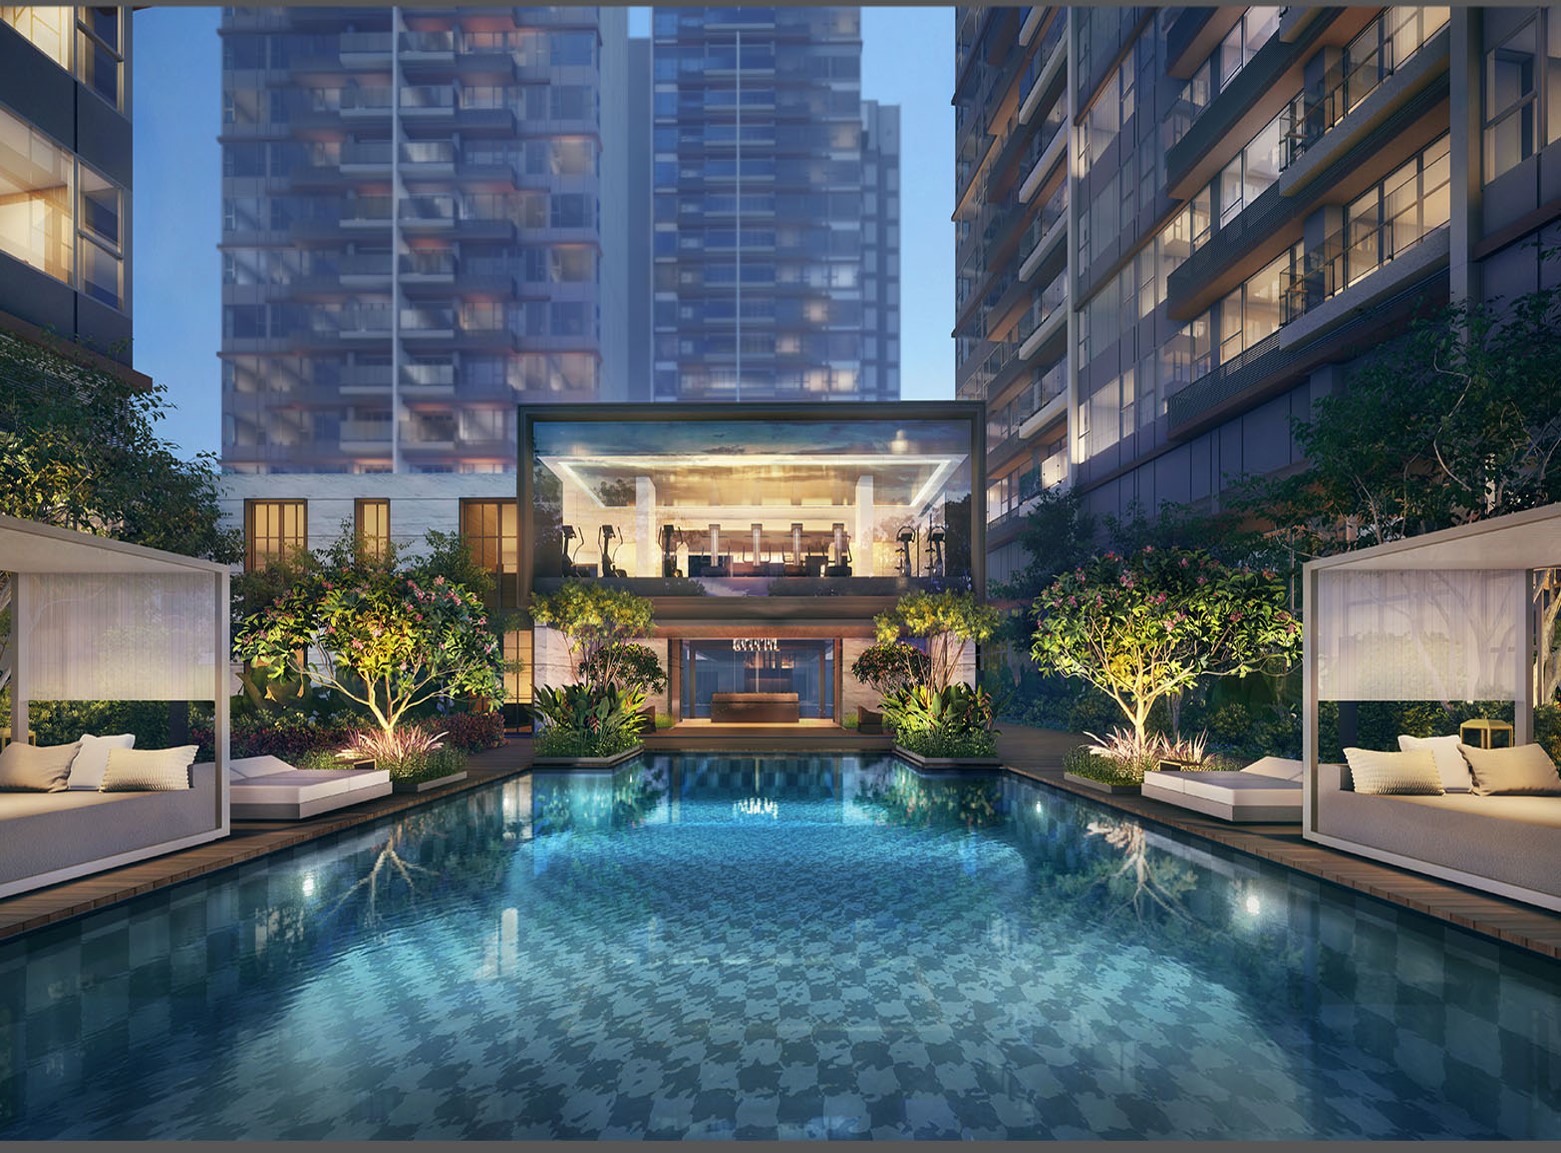 tien ich 2 - Panoramic Saigon River Views! 3BR Furnished Apartment at The River Thu Thiem